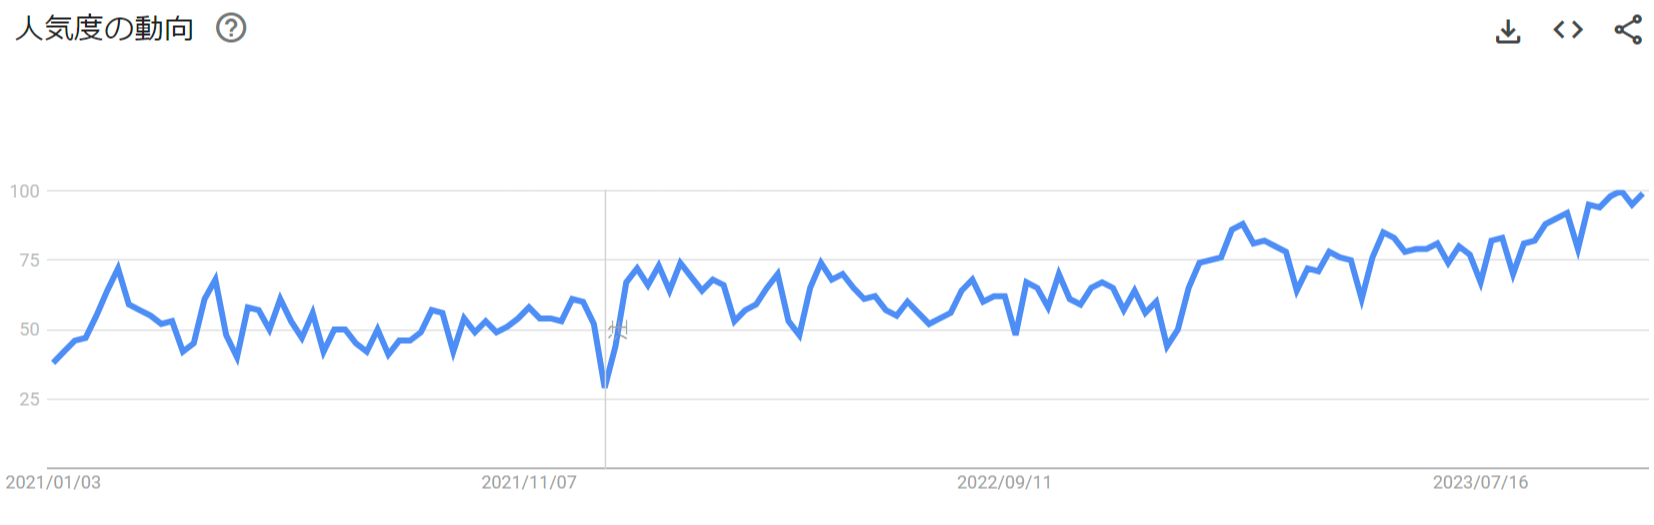 Google Trends検索ワード「相続登記」の人気度の動向